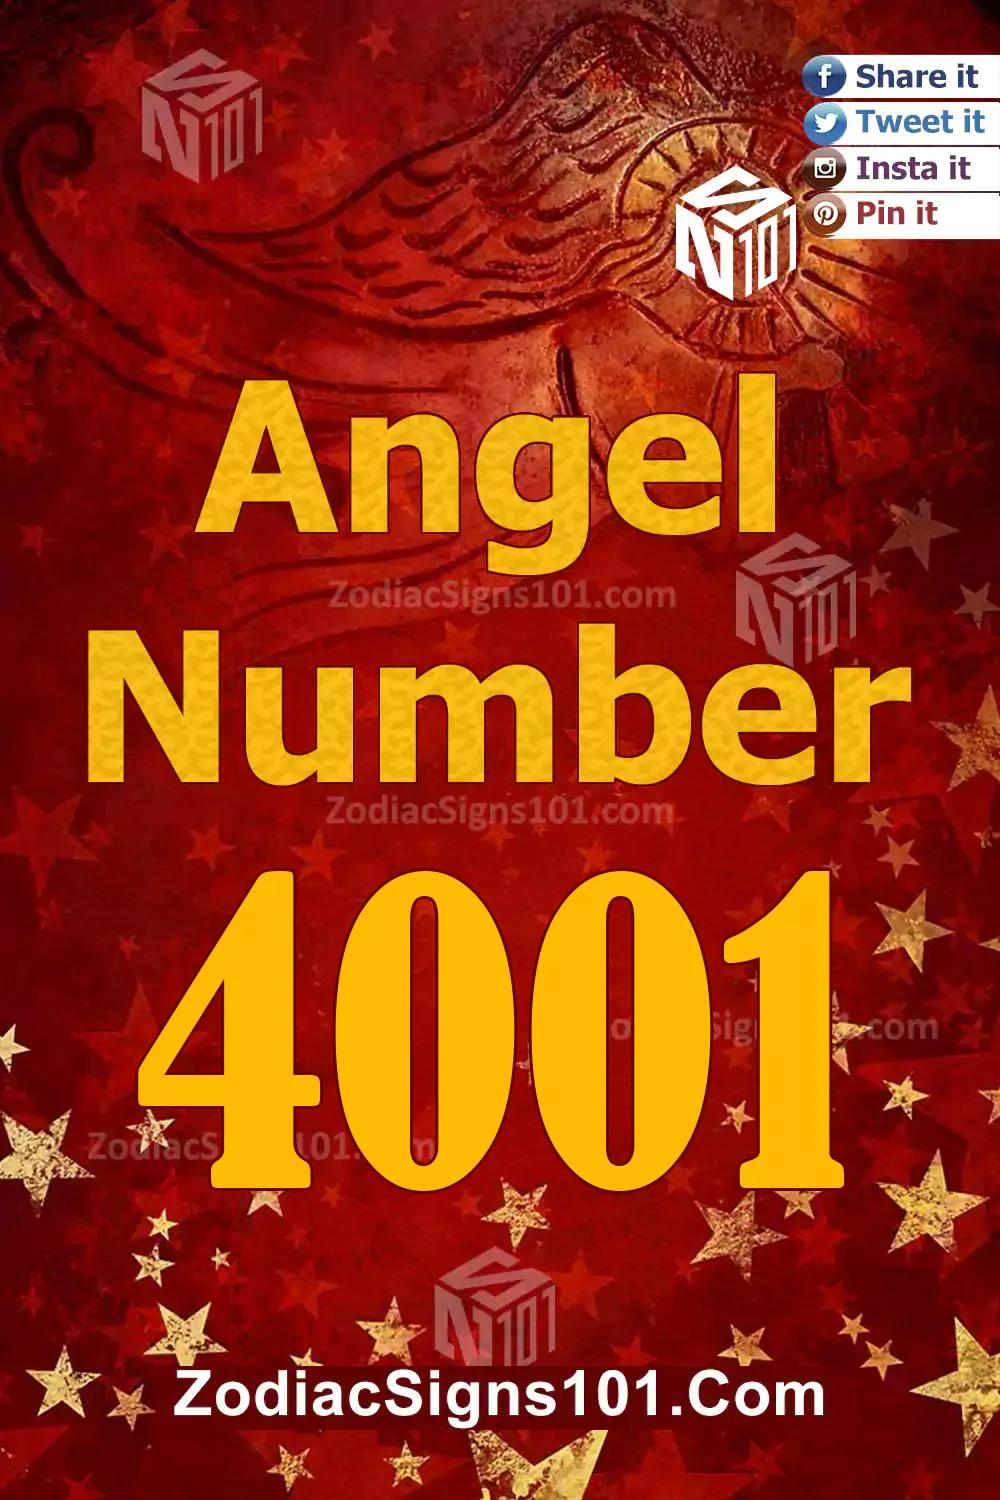 4001-Angel-Number-Meaning.jpg